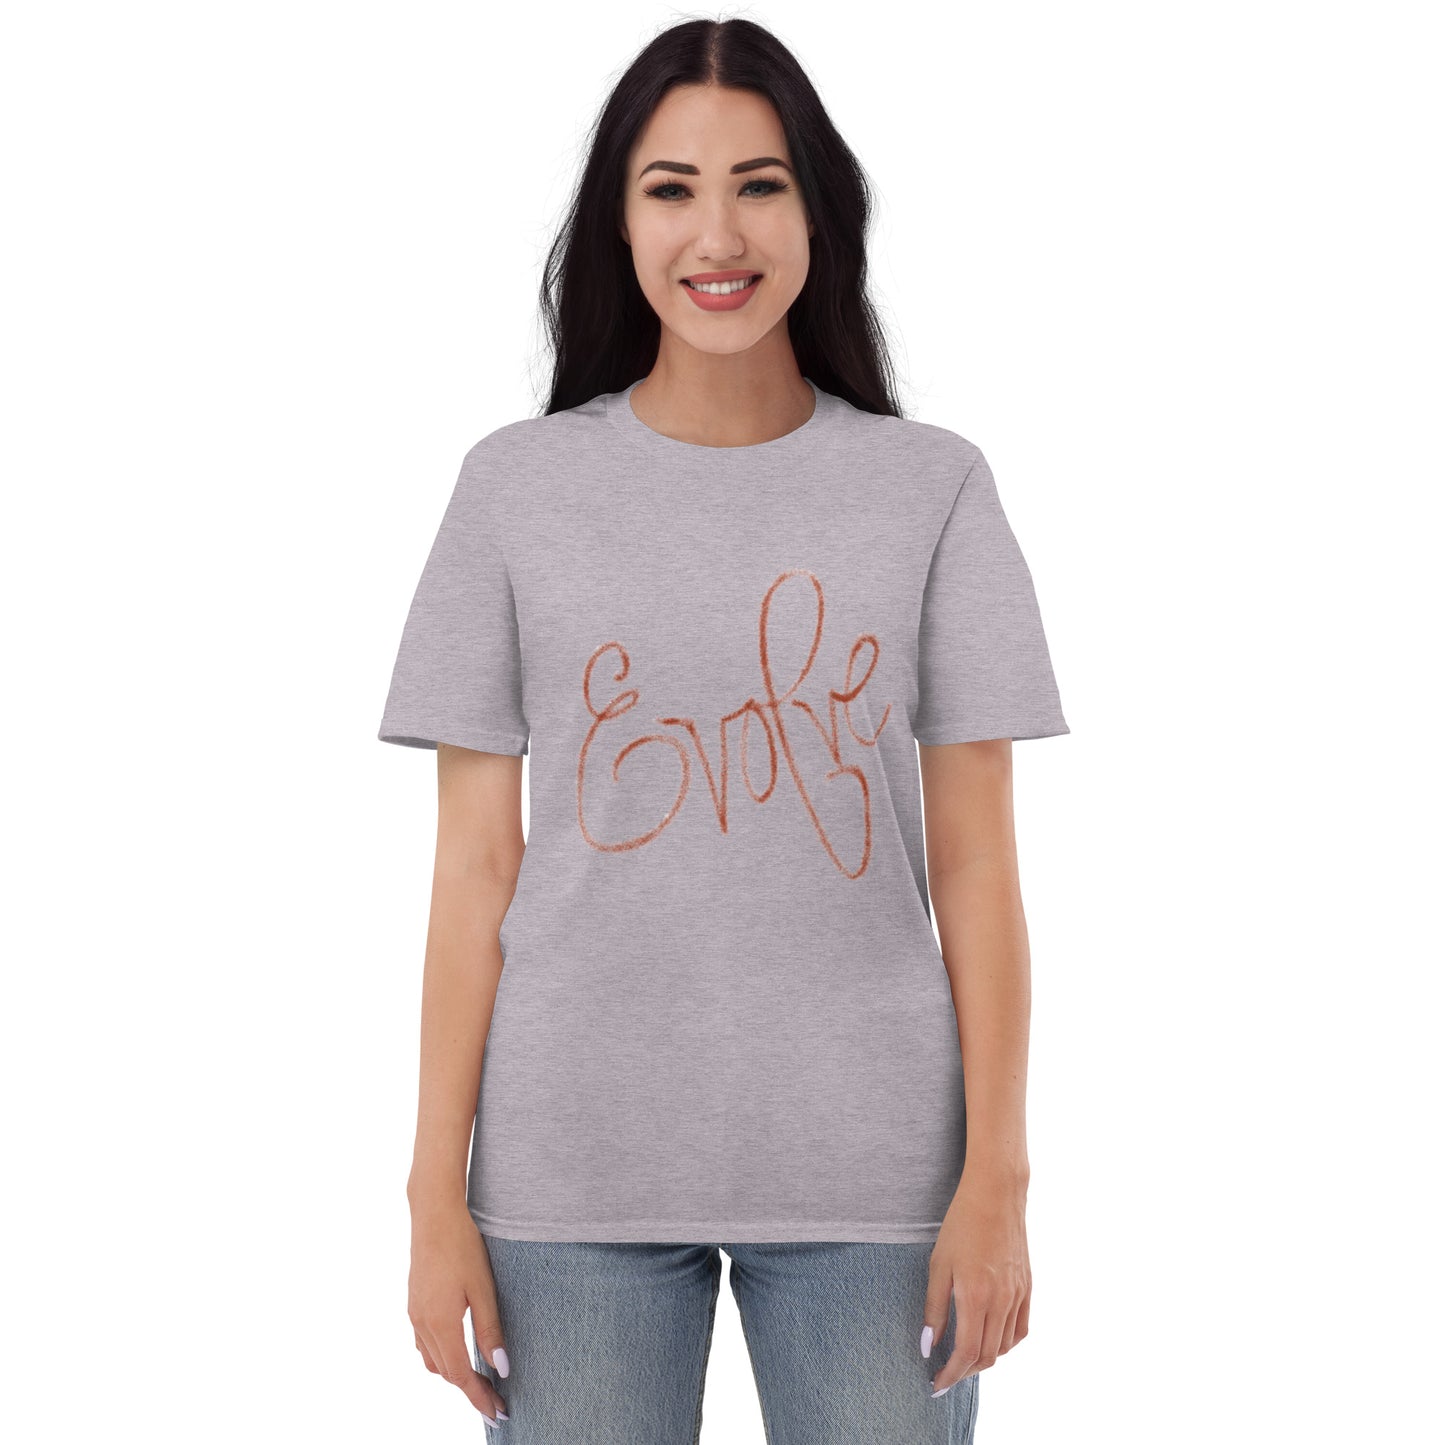 "Evolve" Unisex Short-Sleeve T-Shirt